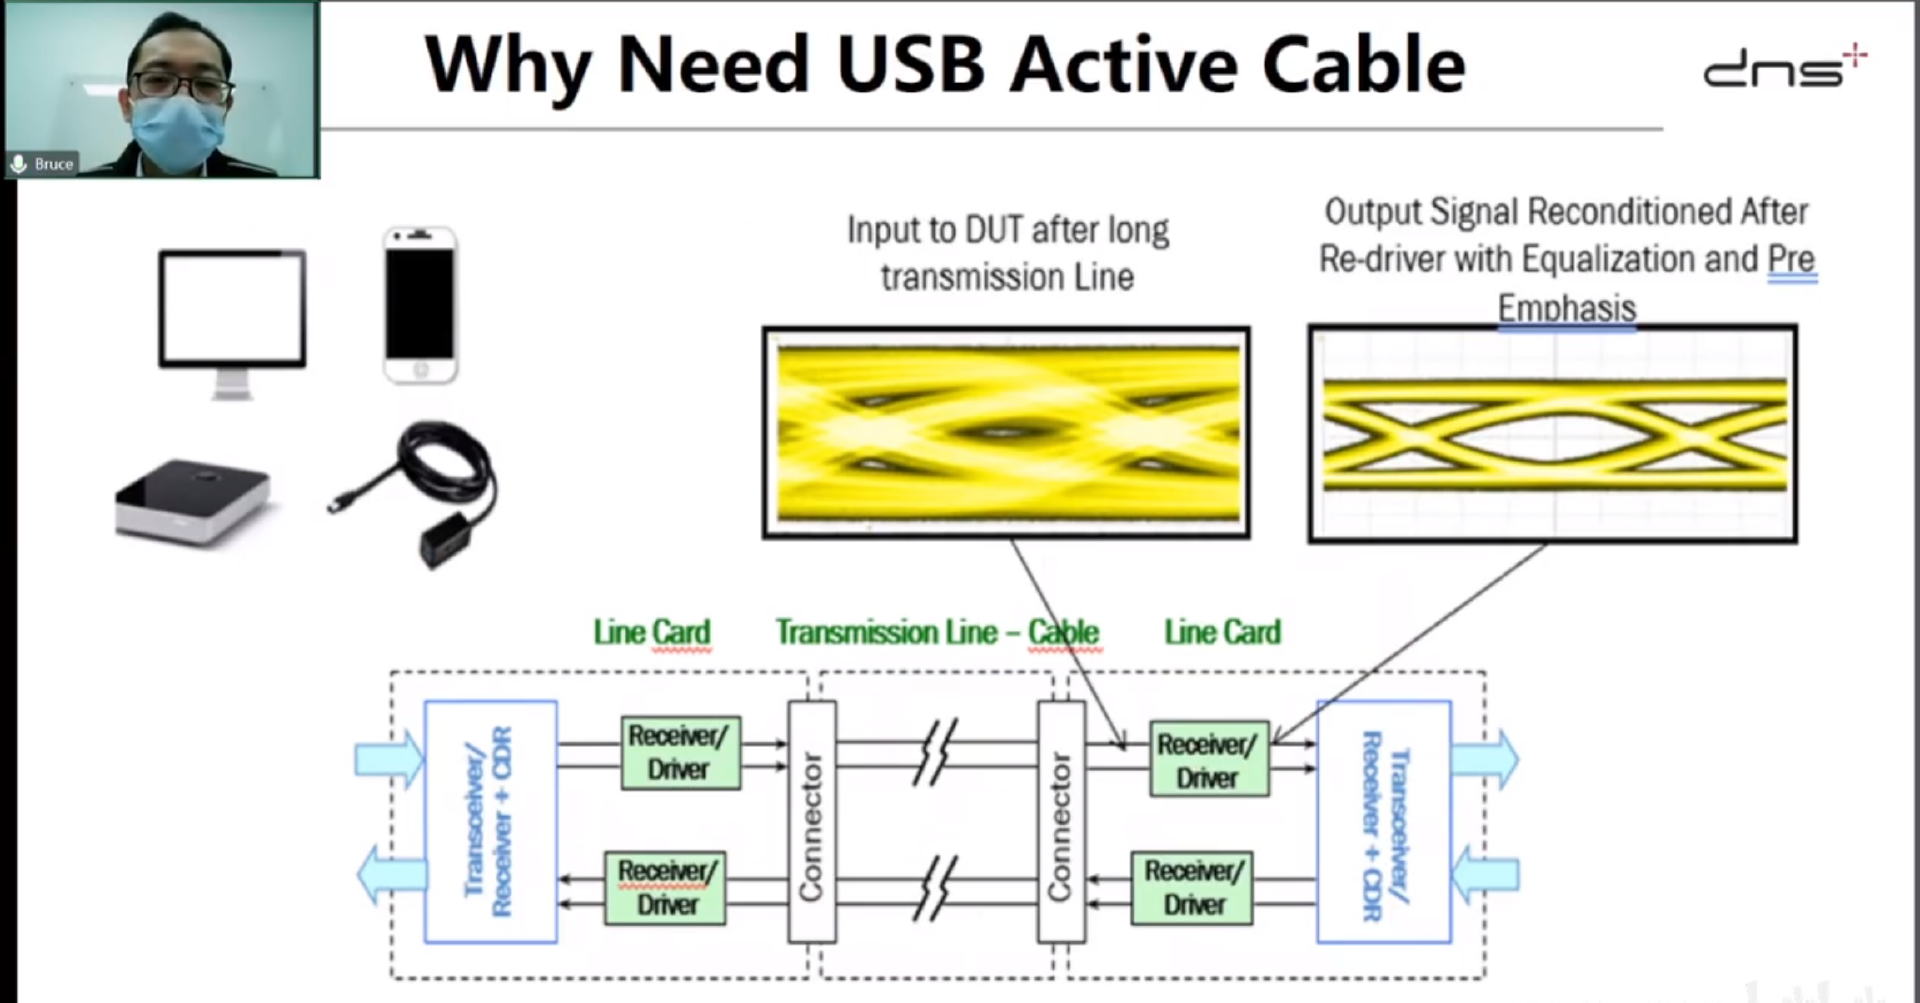 USB-C线缆高功率应用与安全保护方案技术研讨会回顾-充电头网